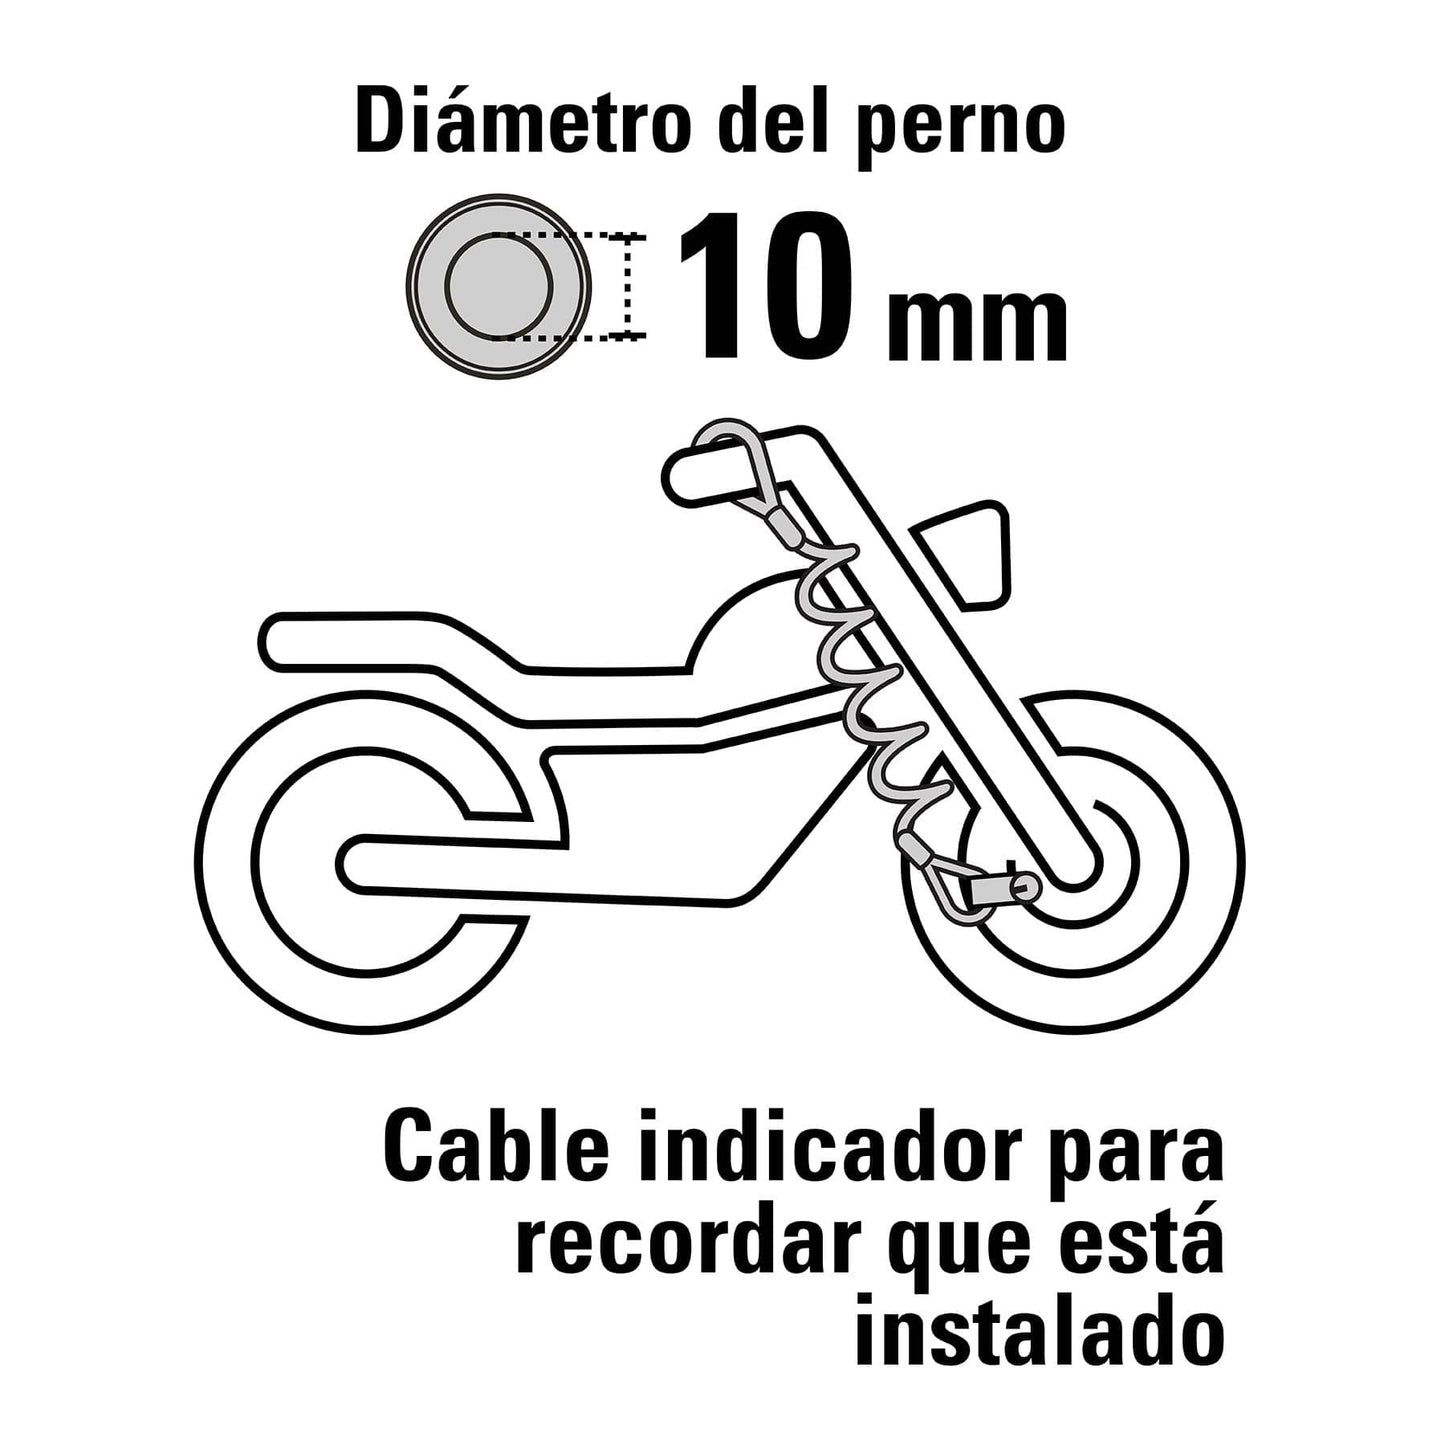 Candado para disco de motocicleta, perno de 10 mm